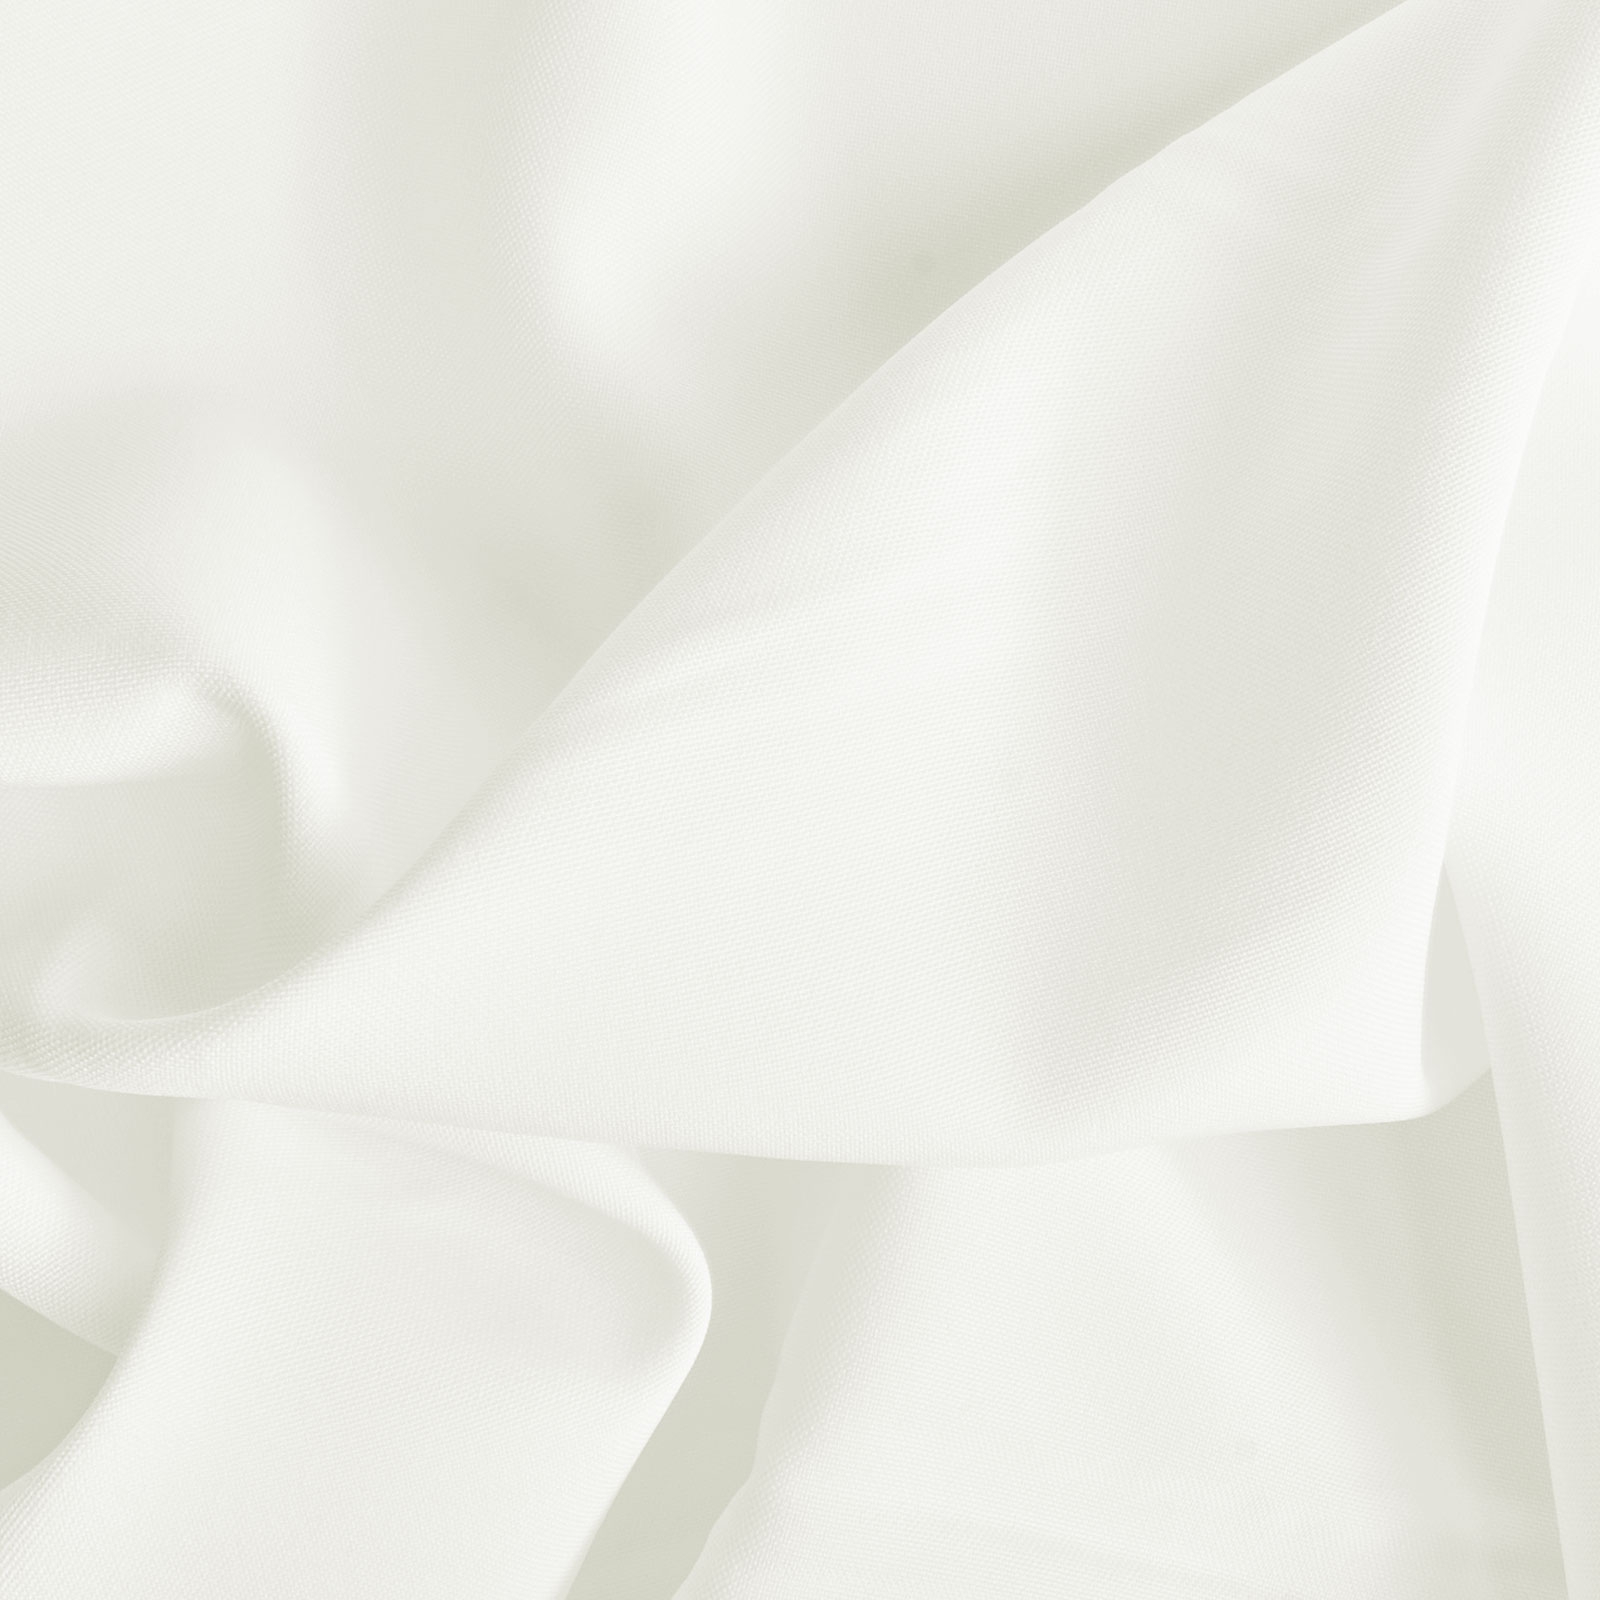 Permanento - Allround decorative fabric - Permanently flame retardant - White